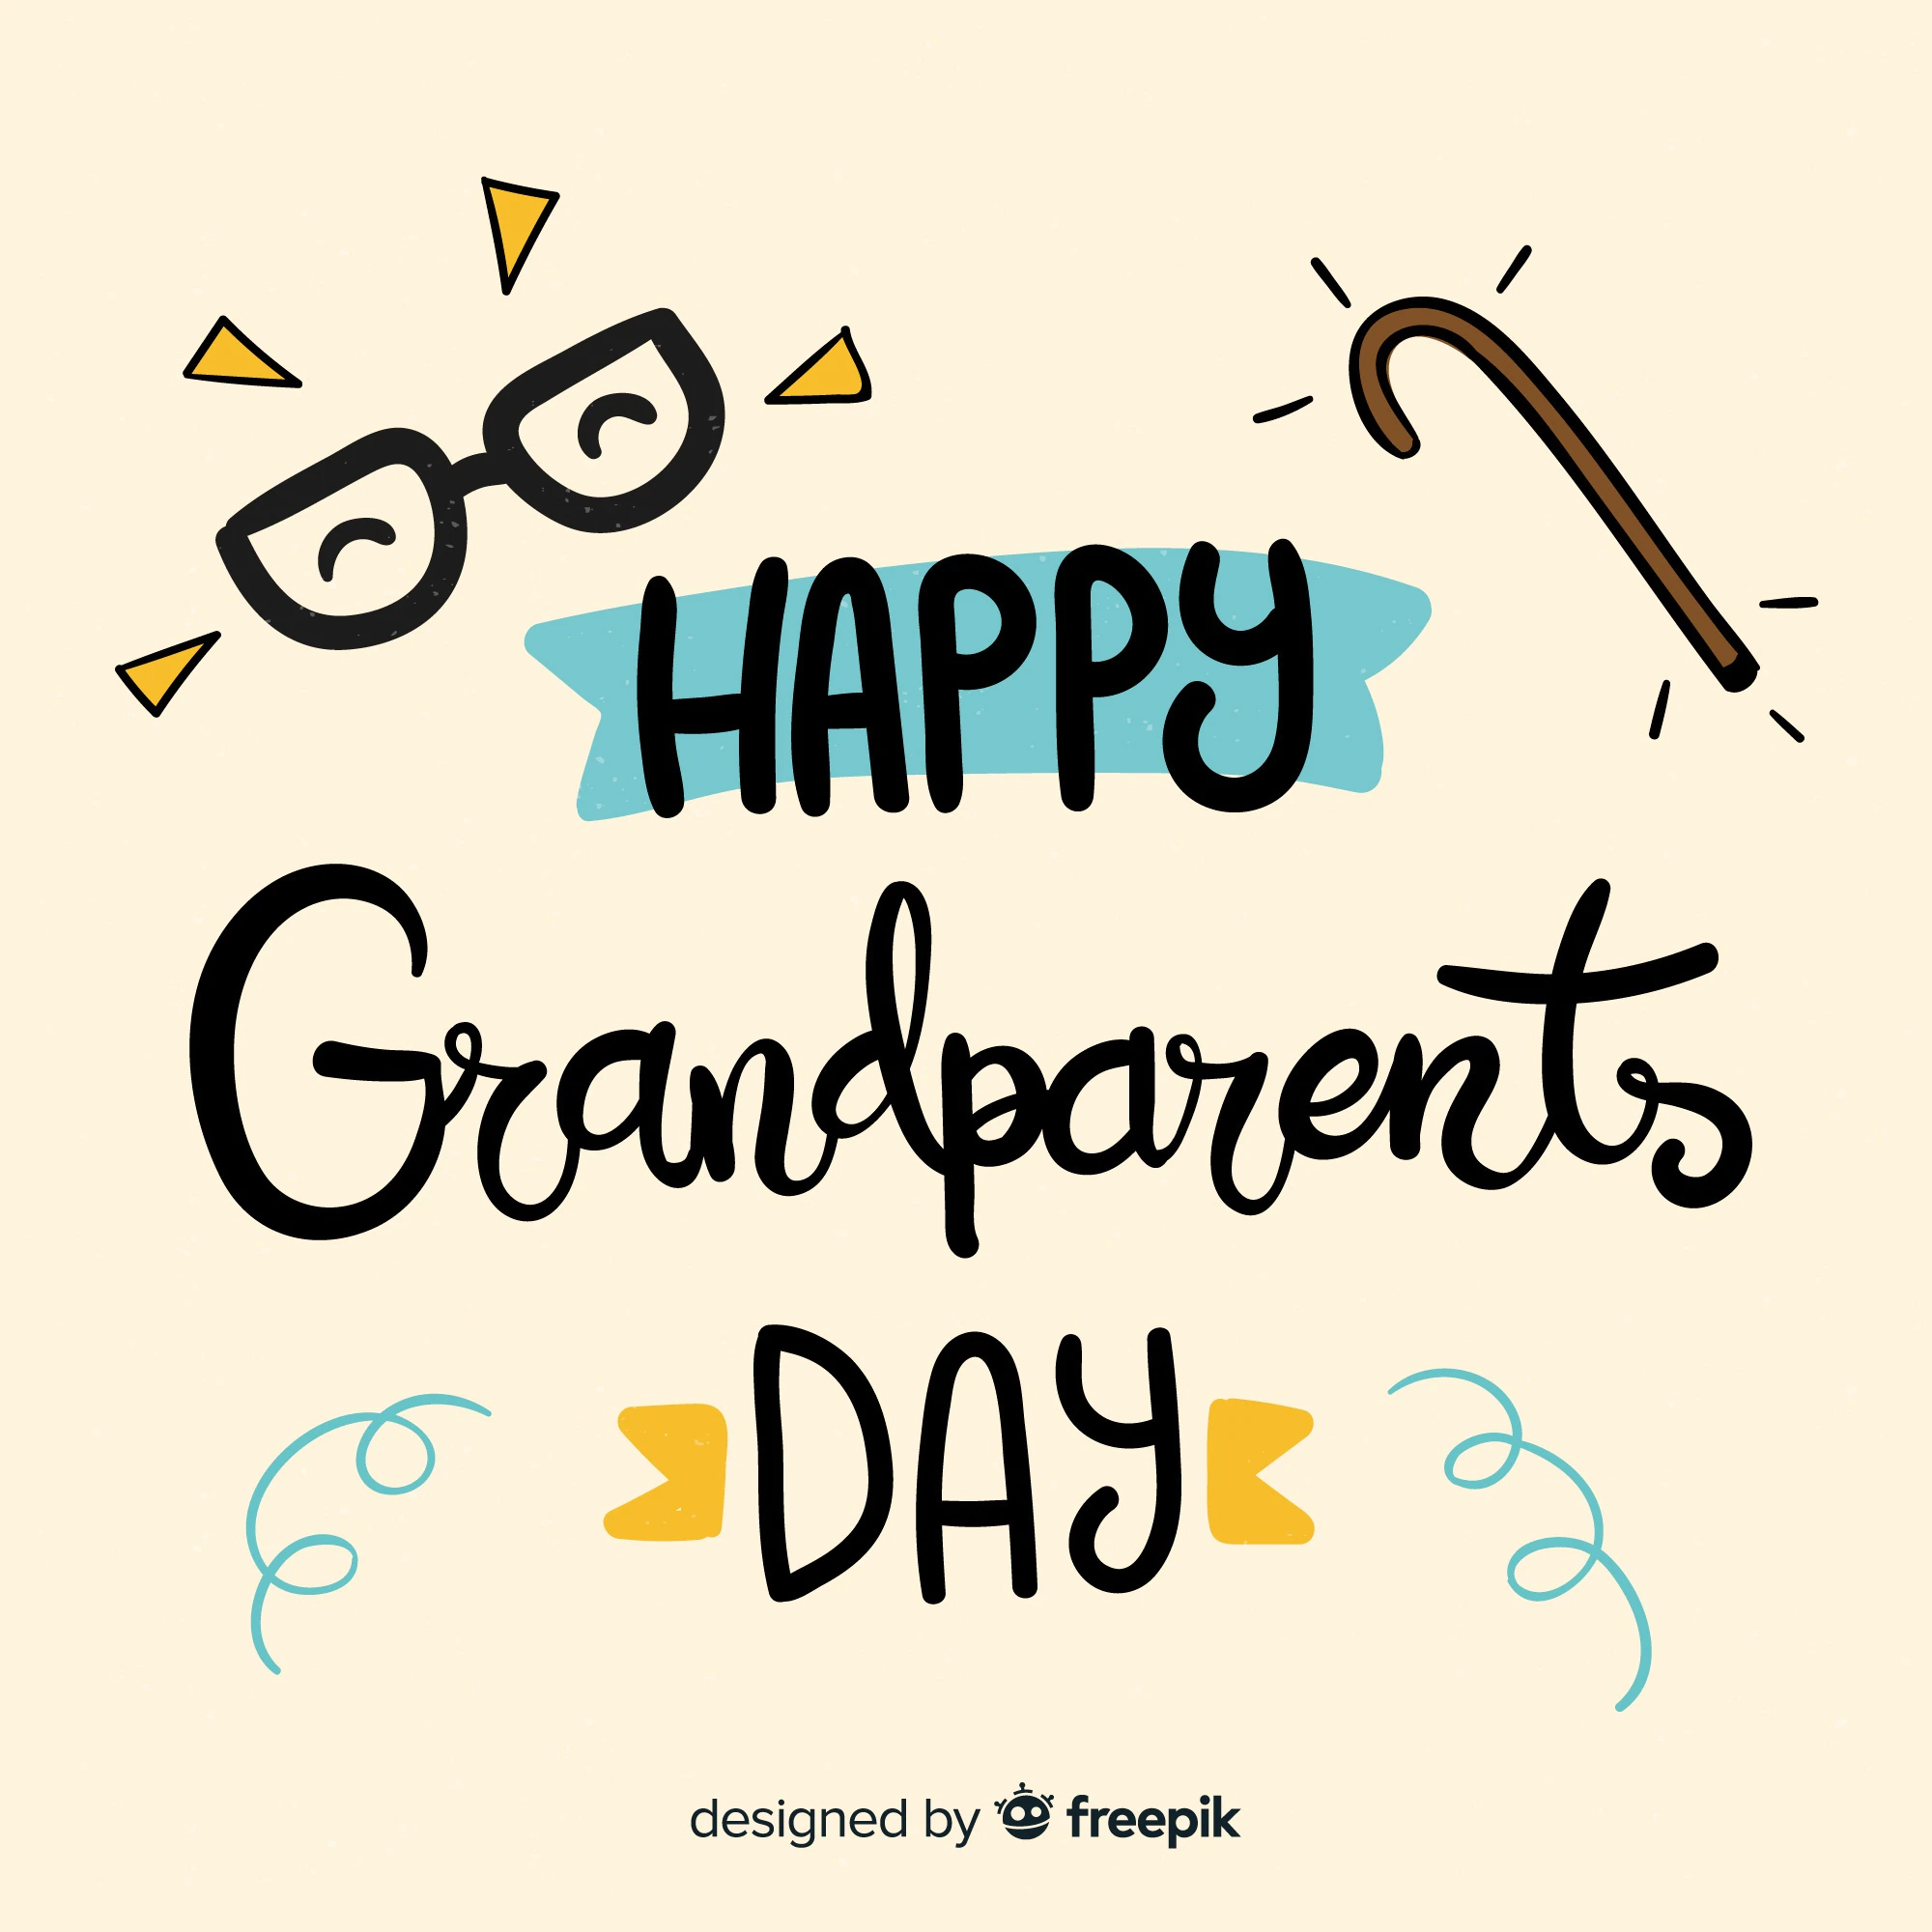 Happy Grandparents' Day 2022: Best WhatsApp Status Video To Download